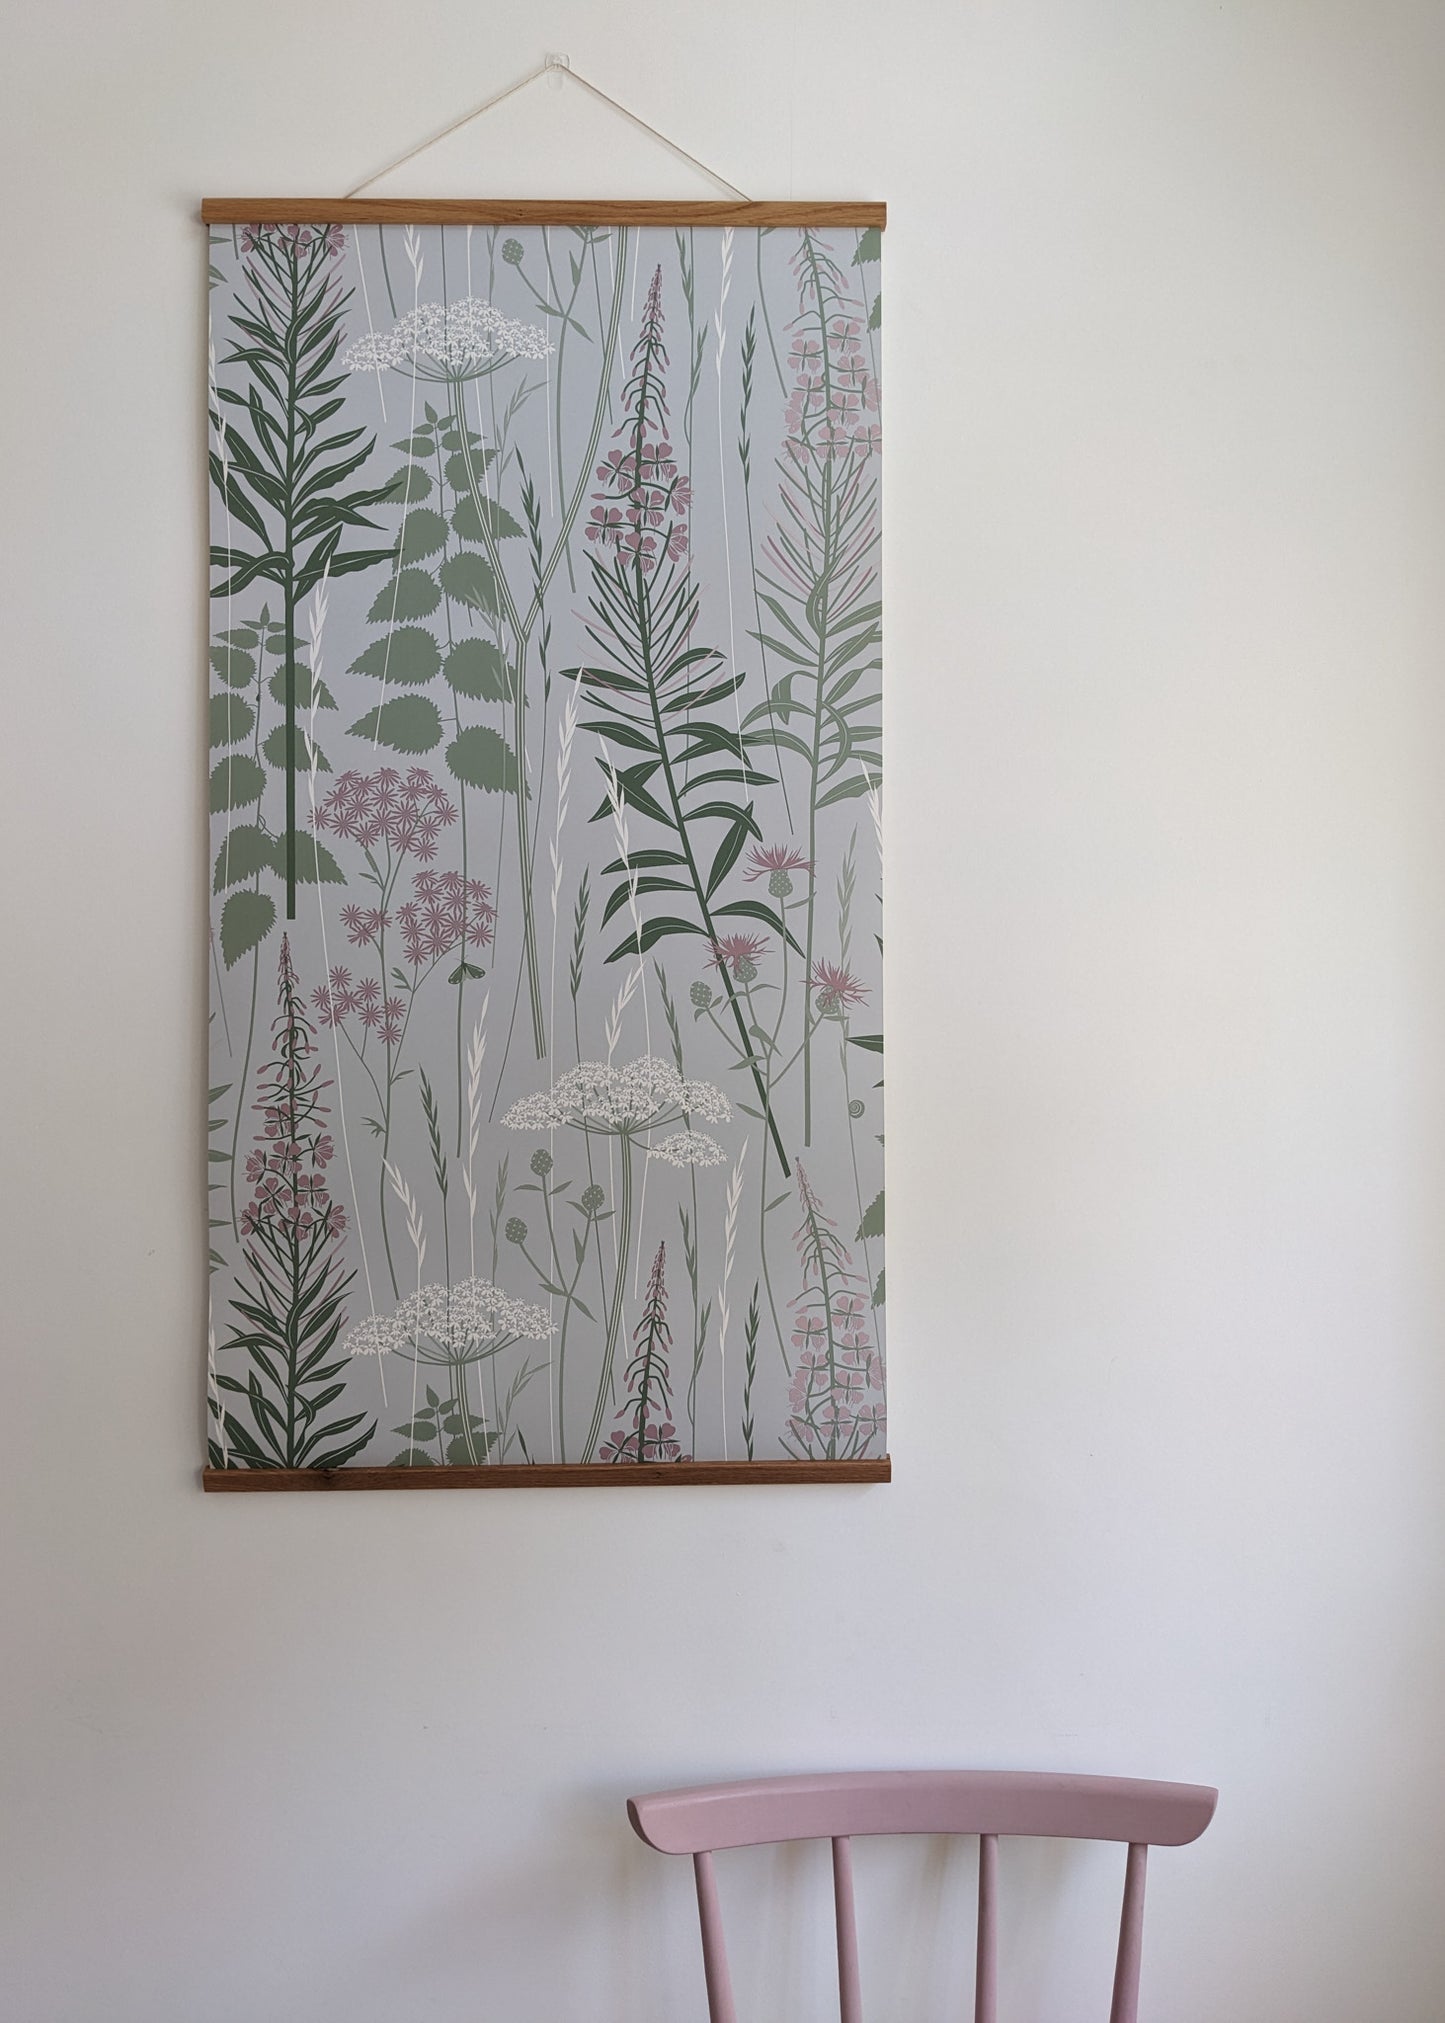 Wild Edge wallpaper in Full Bloom